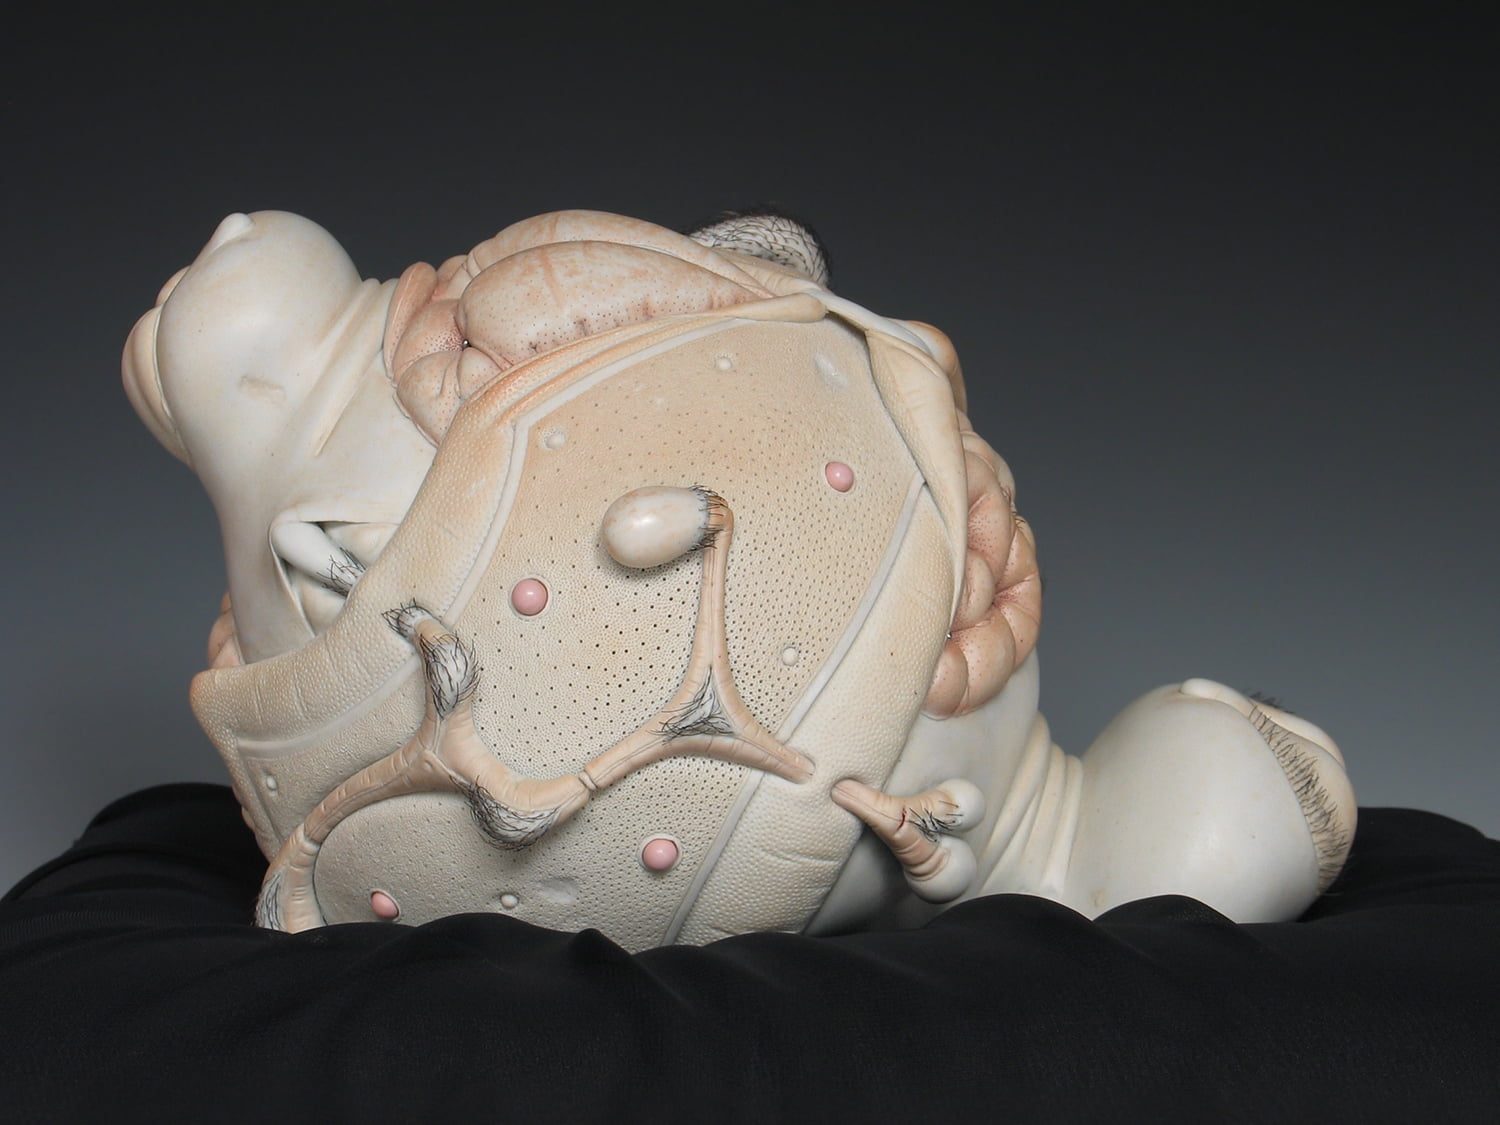 Jason Briggs "Baby". Porcelain, hair, and mixed media sculptural ceramic art.